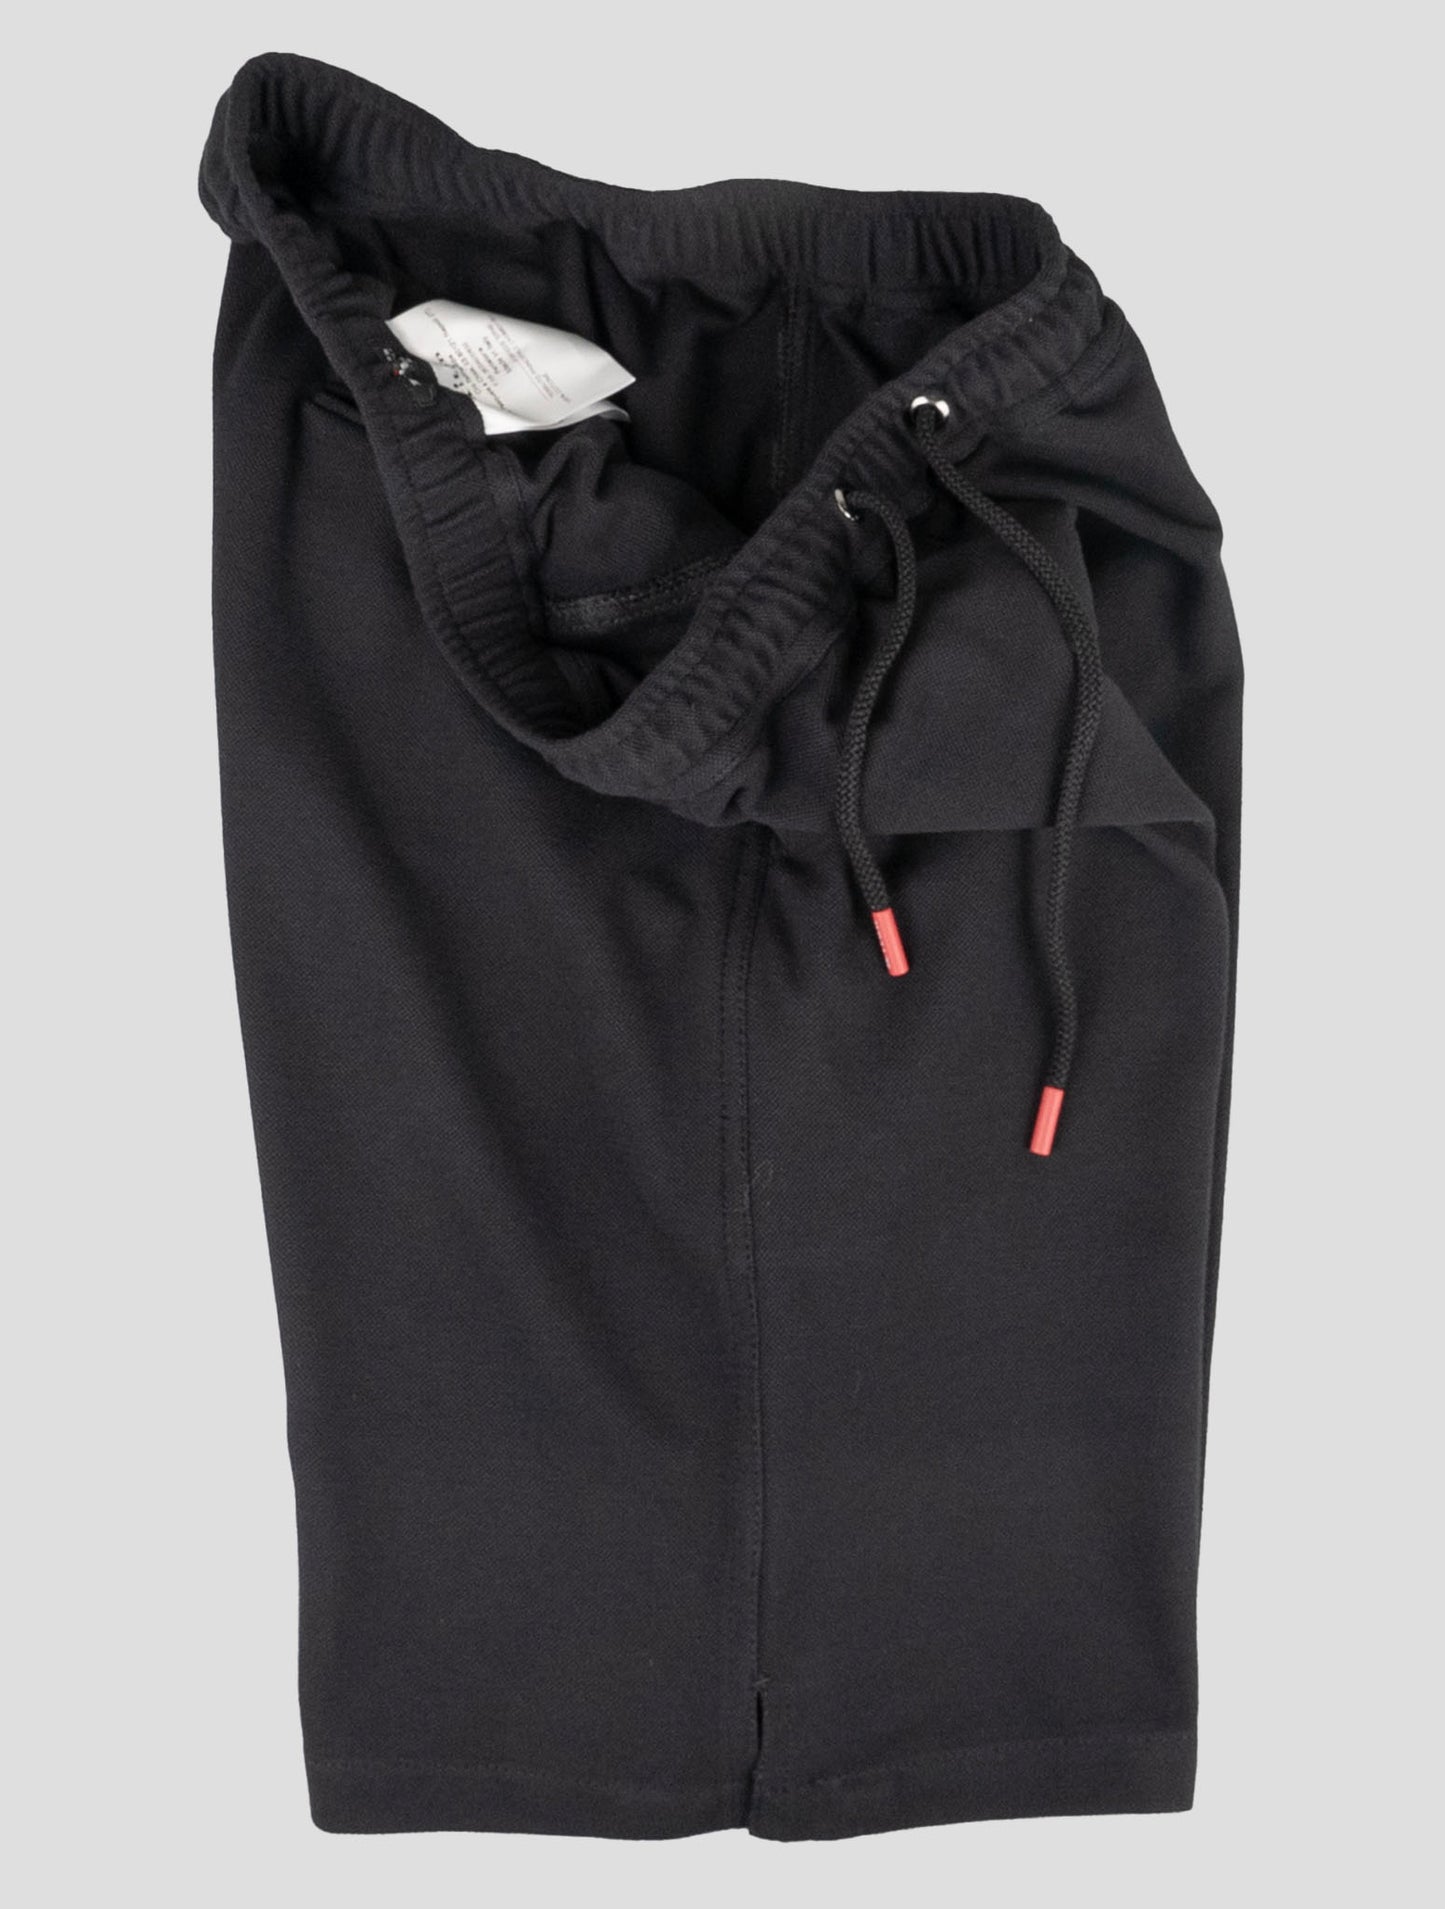 Kiton Matching Outfit-Graue Umbi und schwarze kurze Hosen Trainings anzug